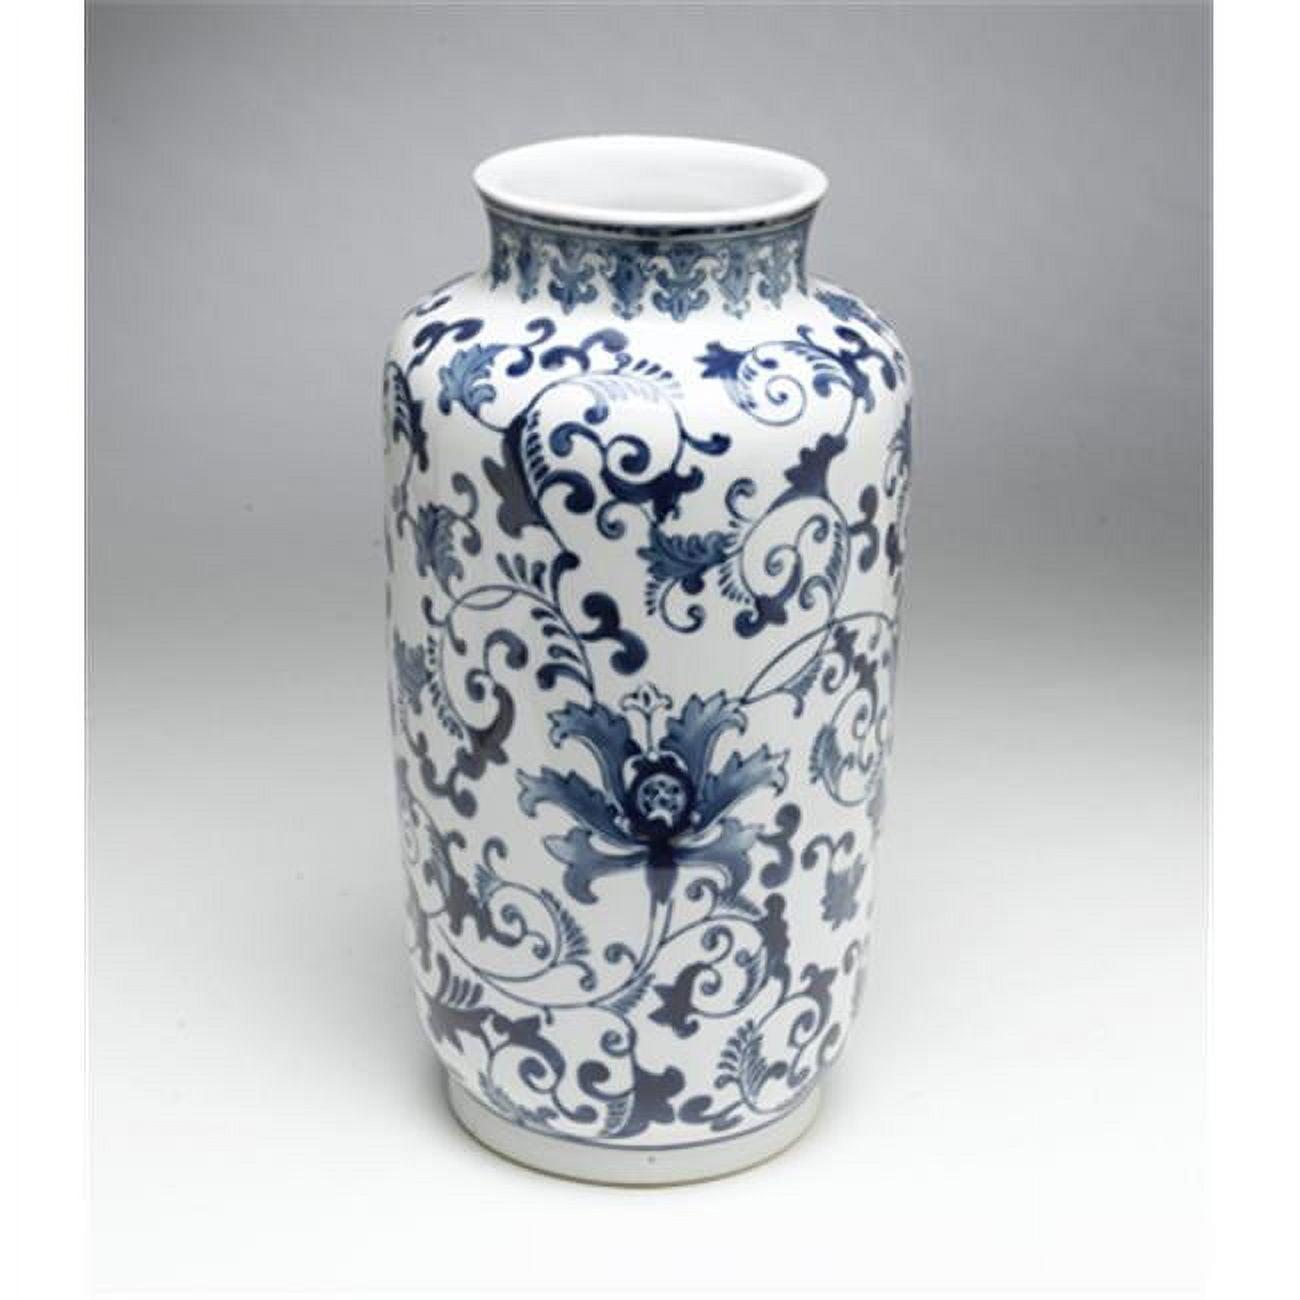 Elegant Porcelain Bouquet Vase in Blue & White with Scrollwork Design